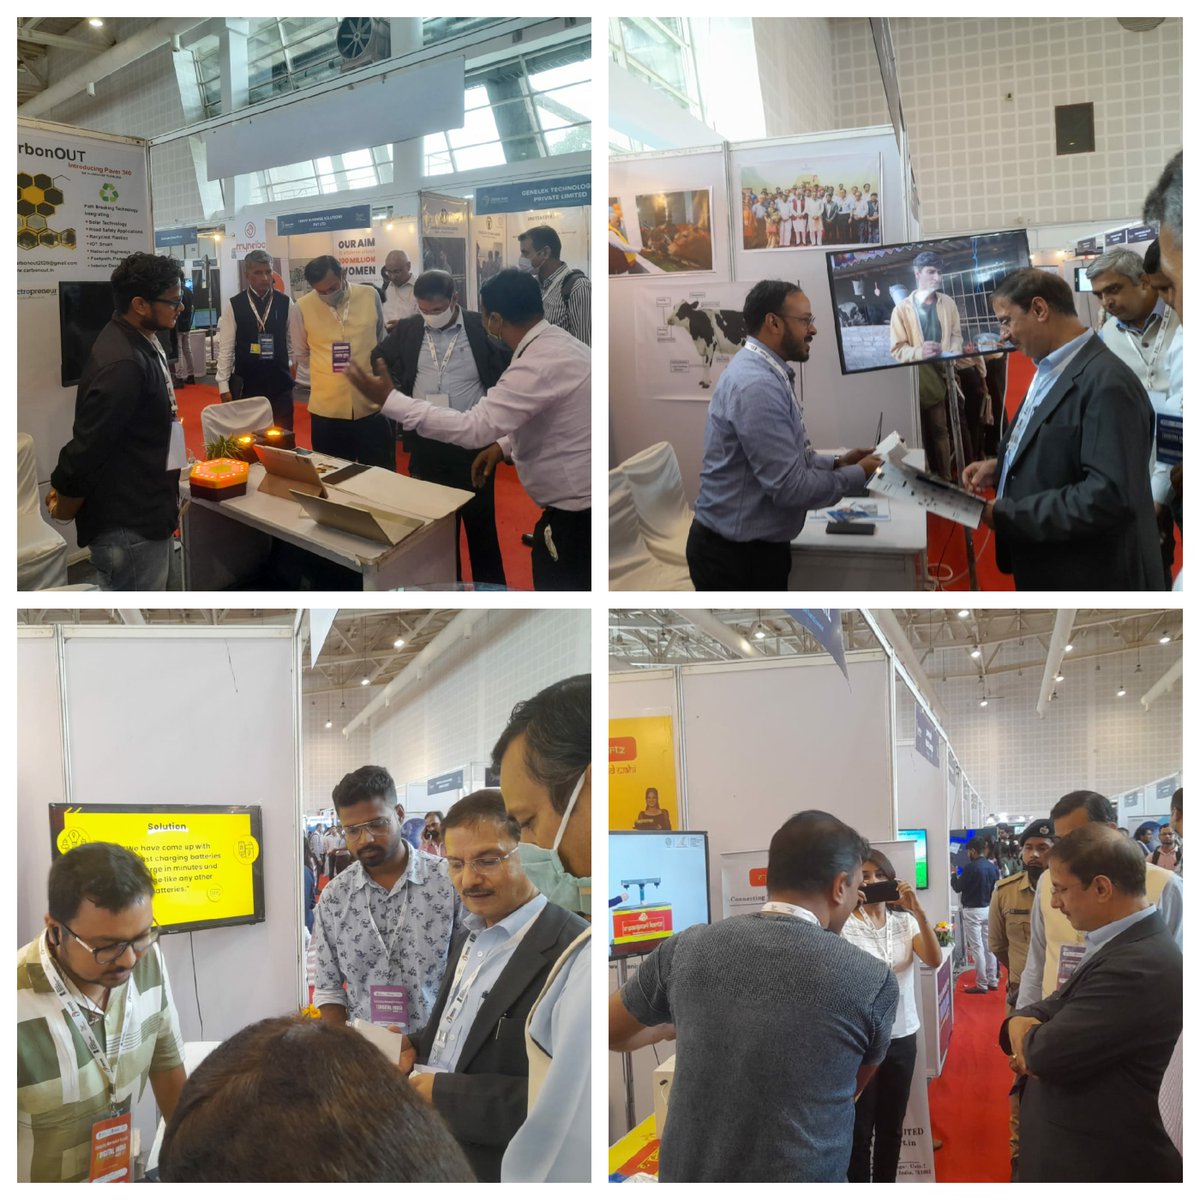 Sh.Alkesh Kumar Sharma,Secretary @GoI_MeitY visited stalls and interacted with #Startups of @stpiepbbs and #NGIS at @stpibbsr in #DigitalIndia Week 2022 exhibition at Gandhinagar.#IndiasTechade #StartupConference @AshwiniVaishnaw @Rajeev_GoI @alkesh12sharma @arvindtw